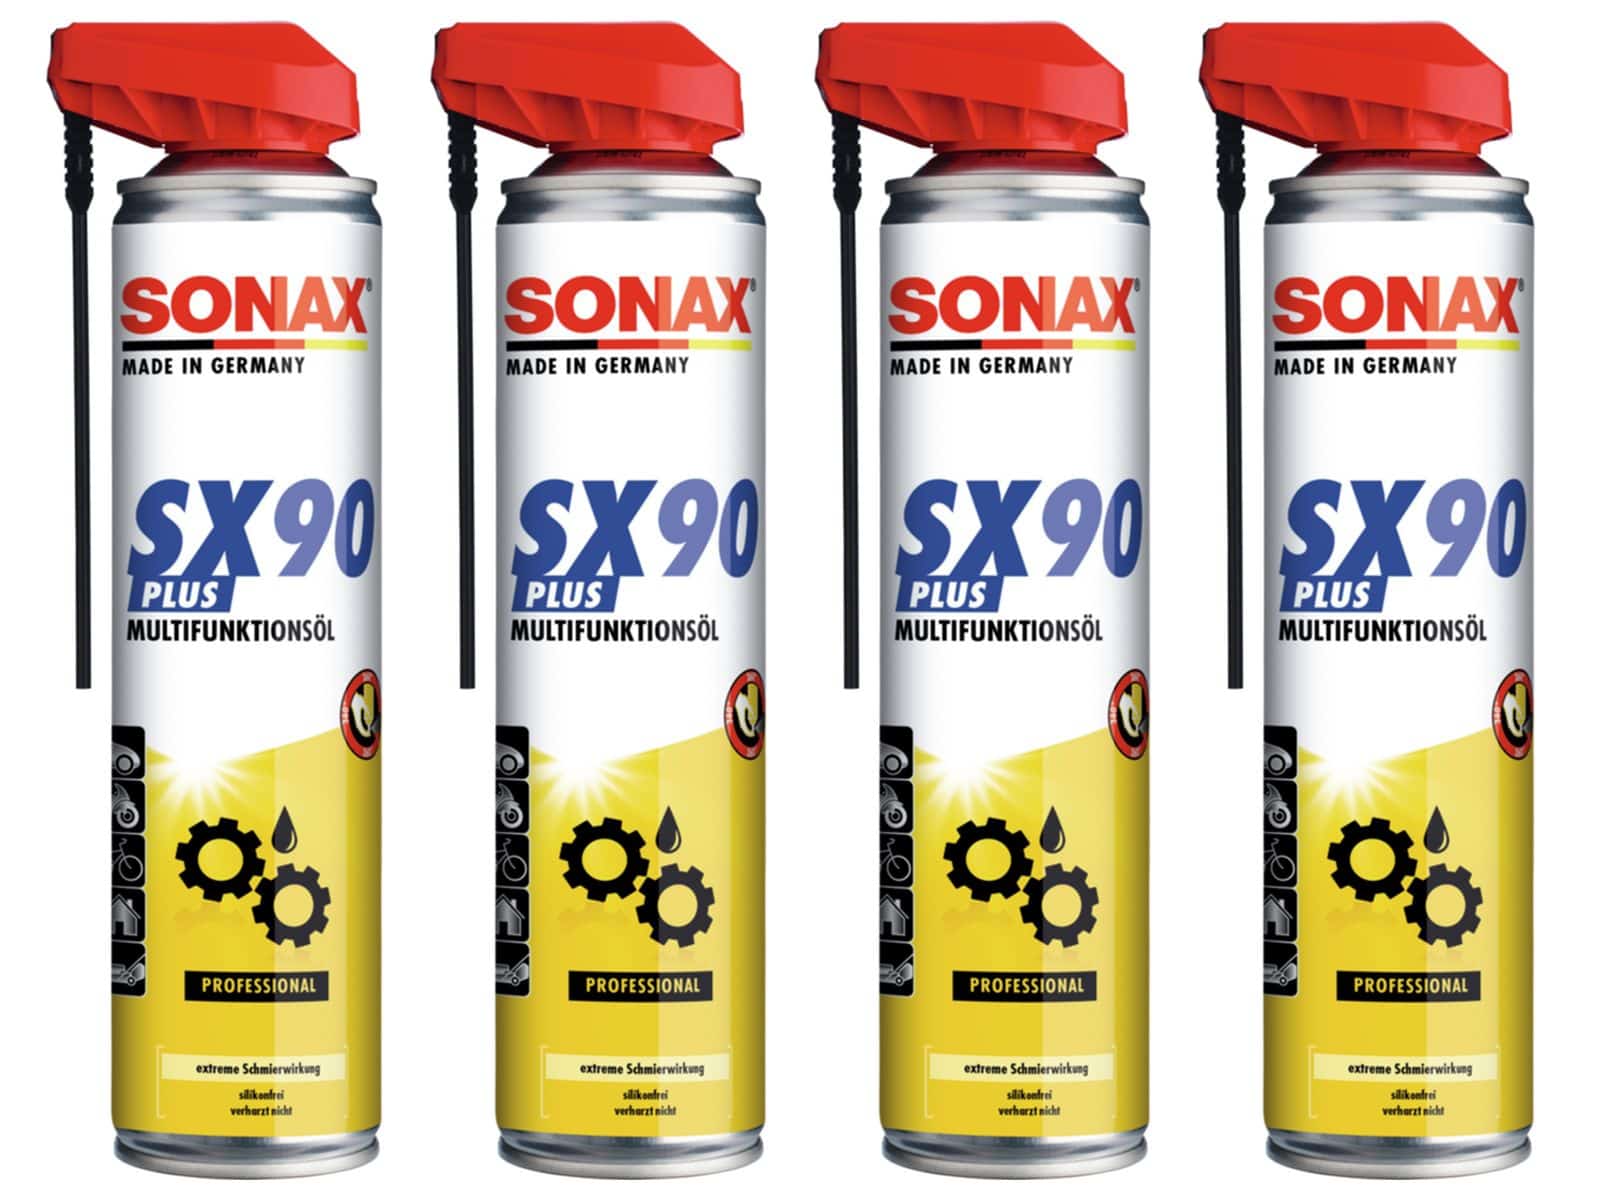 SONAX Multifunktionsöl, SX90 PLUS EasySpray, 400 ml, 4 Stück von Sonax